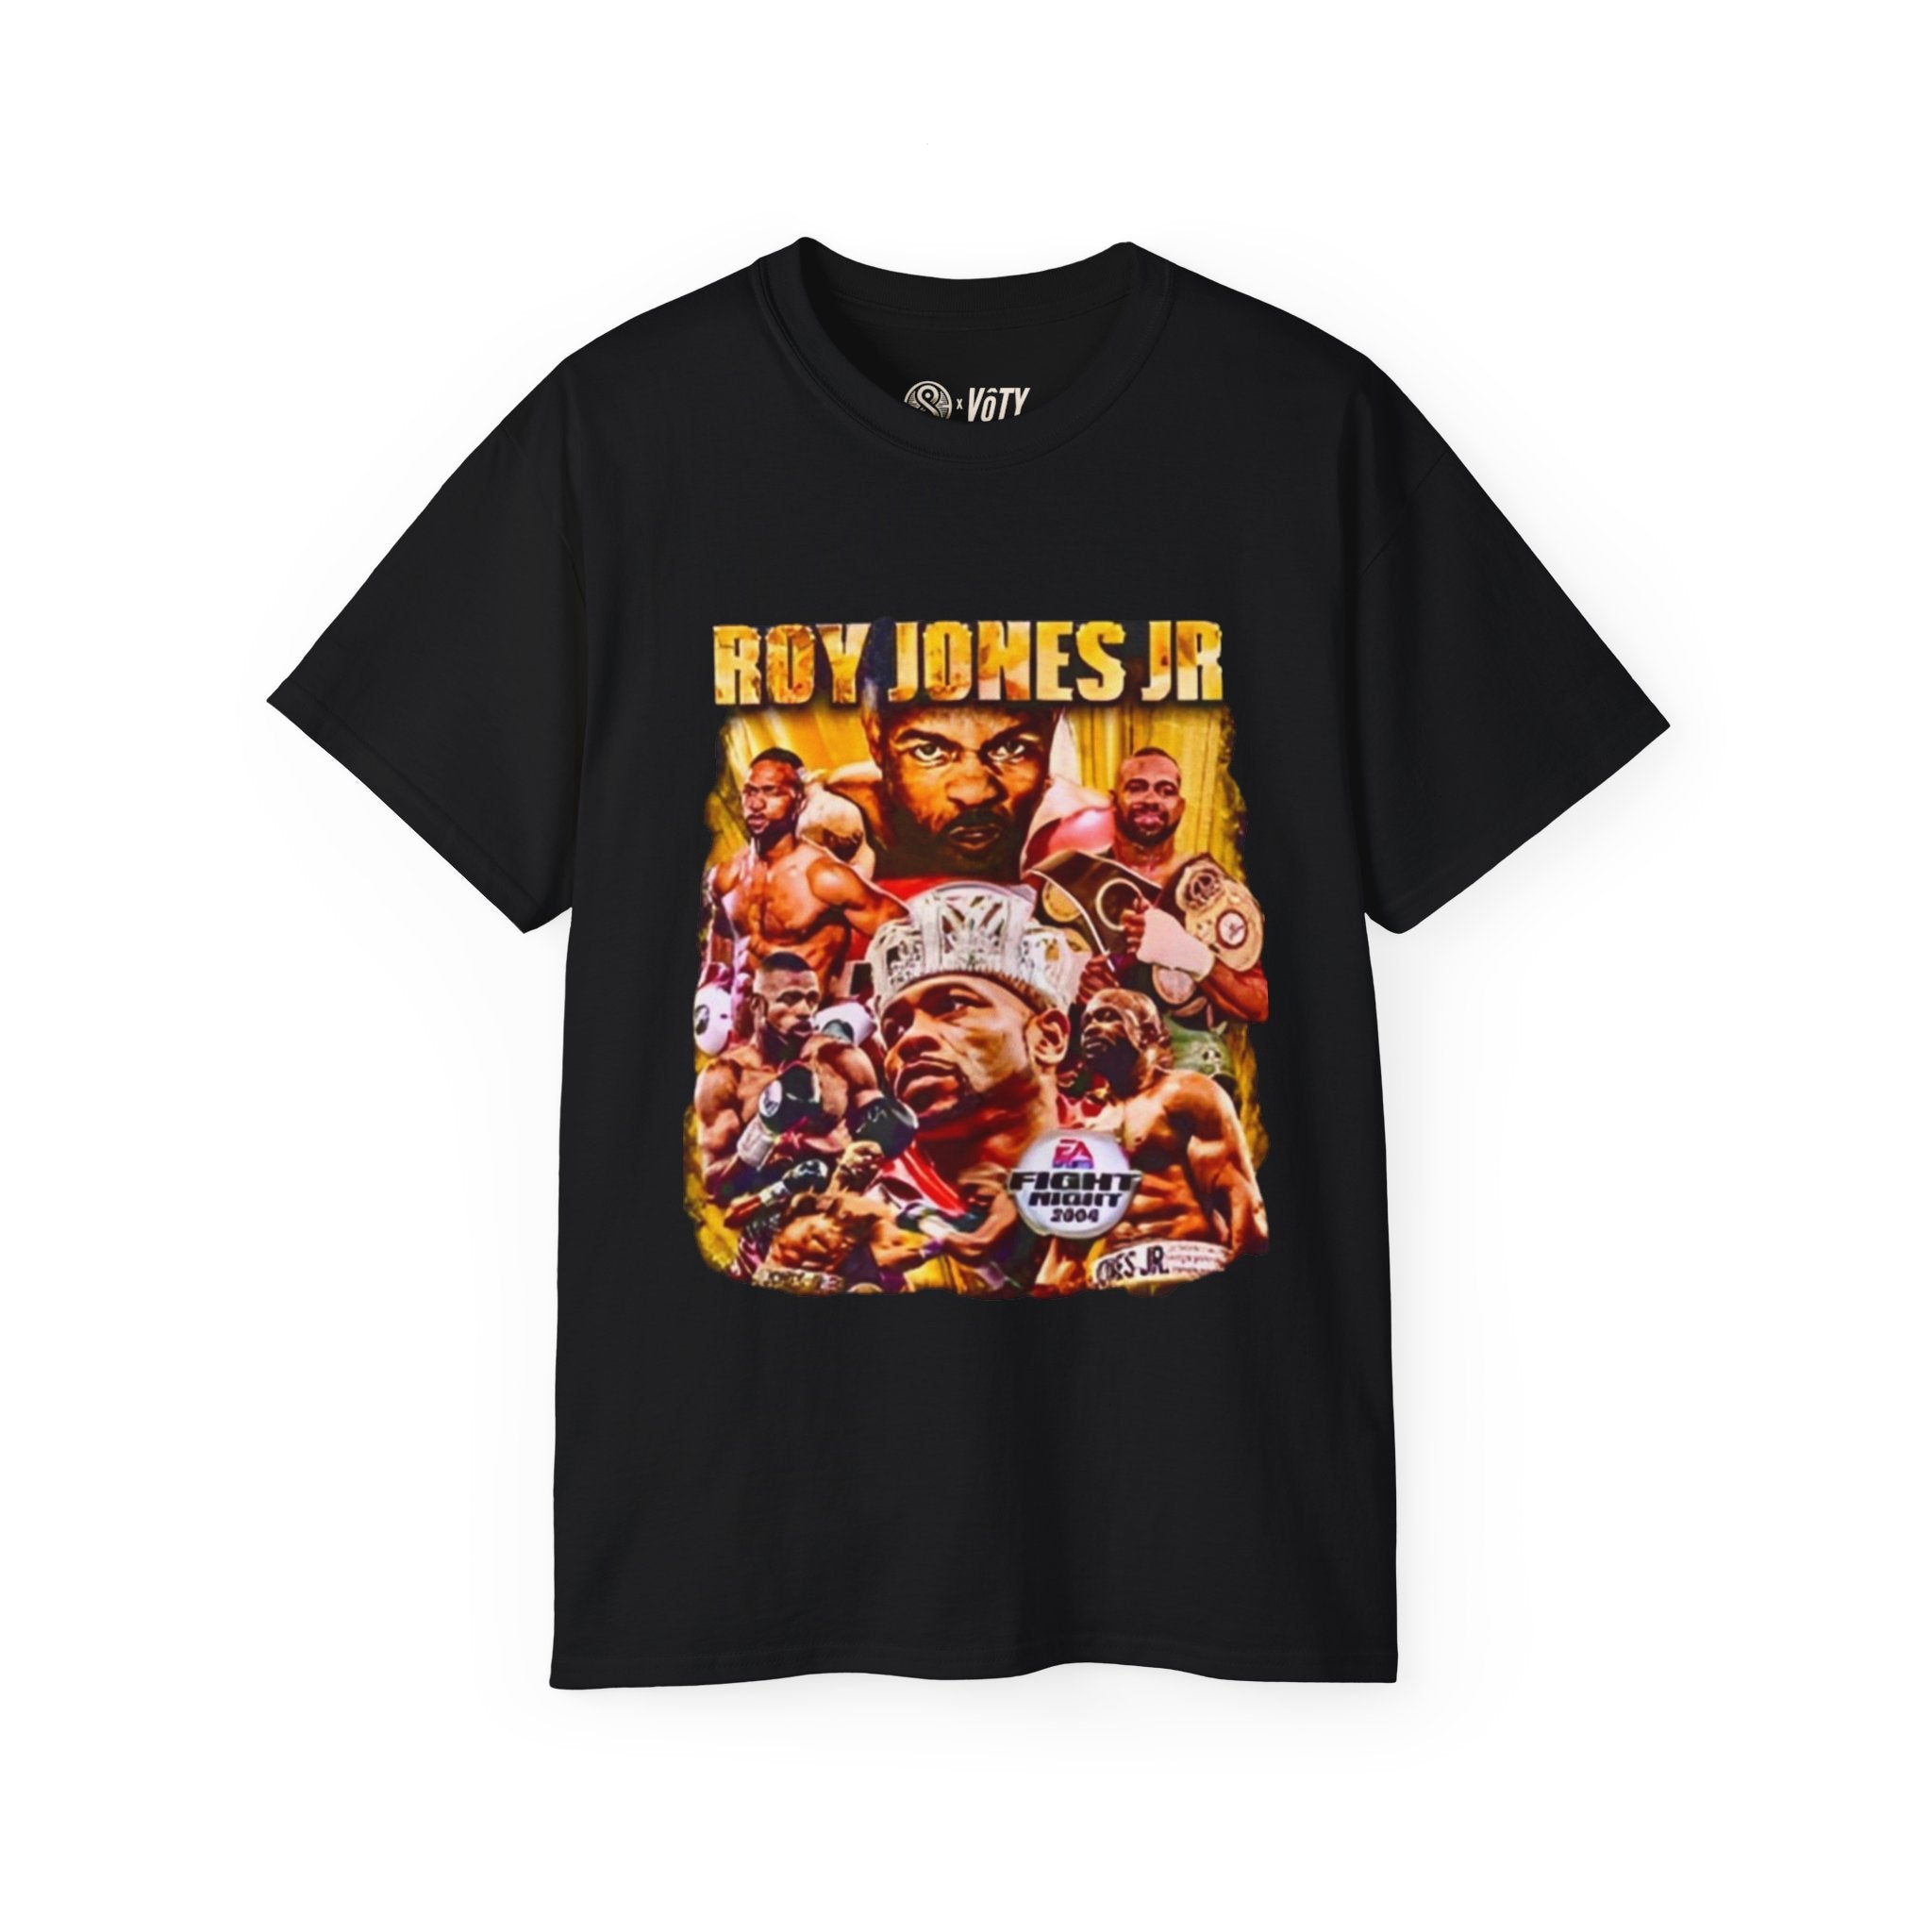 Roy Jones Jr. T-Shirt